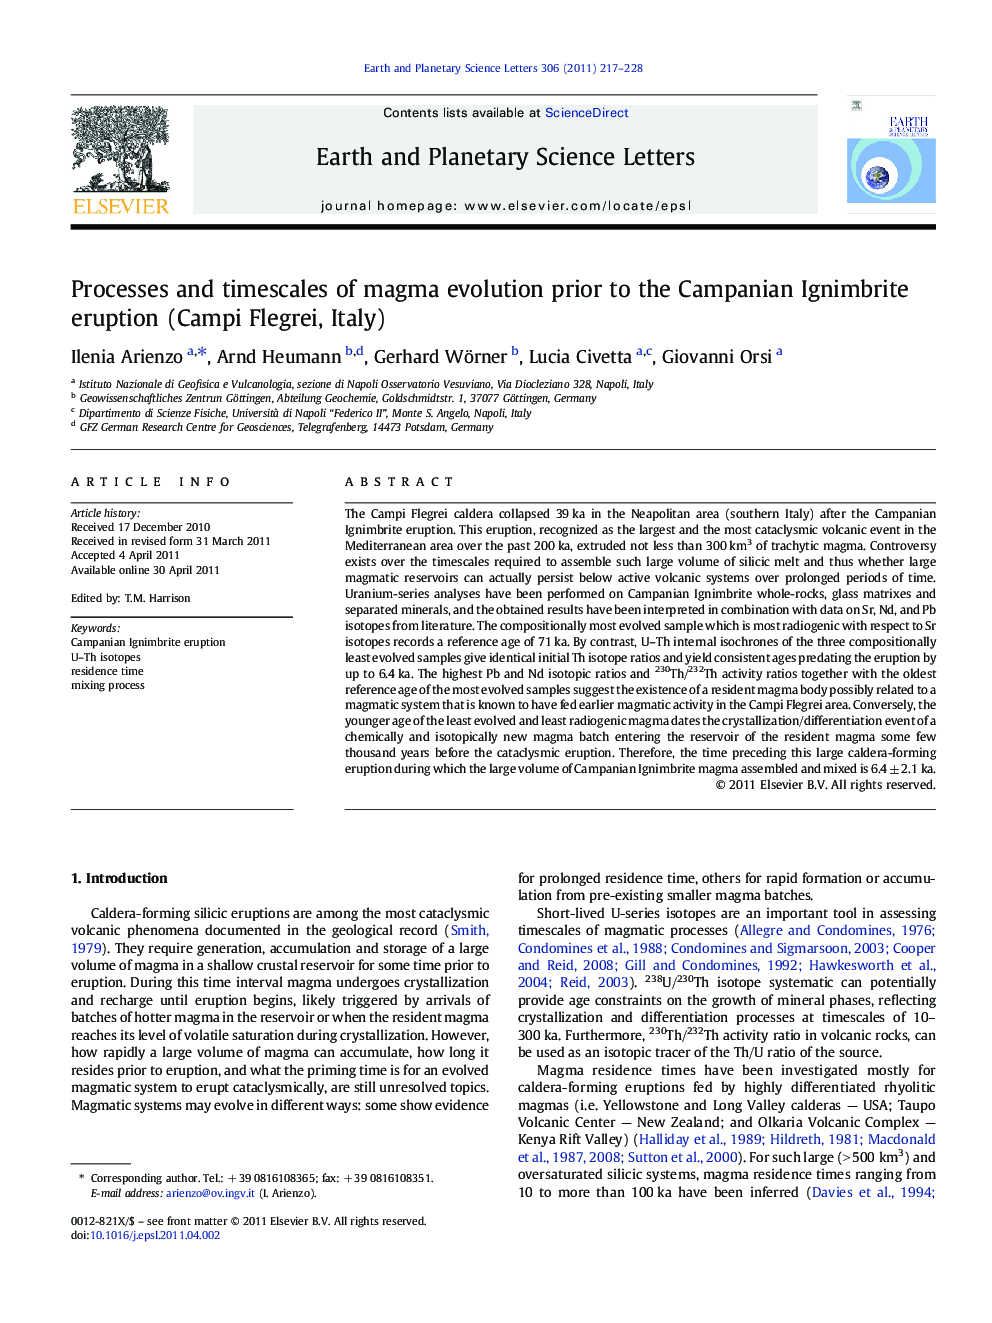 Processes and timescales of magma evolution prior to the Campanian Ignimbrite eruption (Campi Flegrei, Italy)